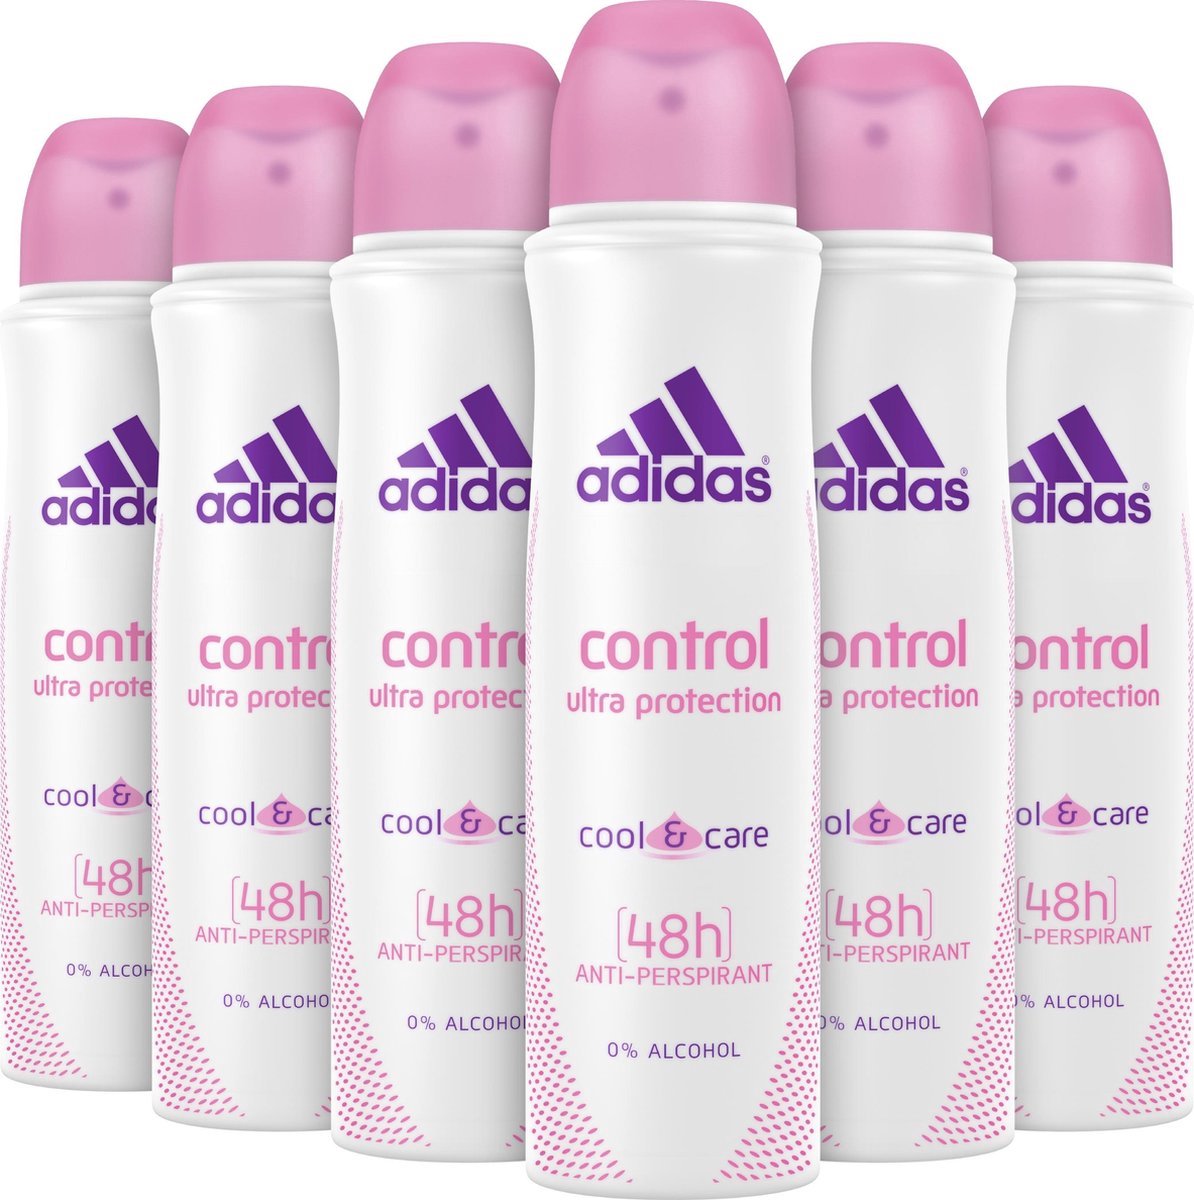 Adidas Cool & Care Control - - x 150 ml |